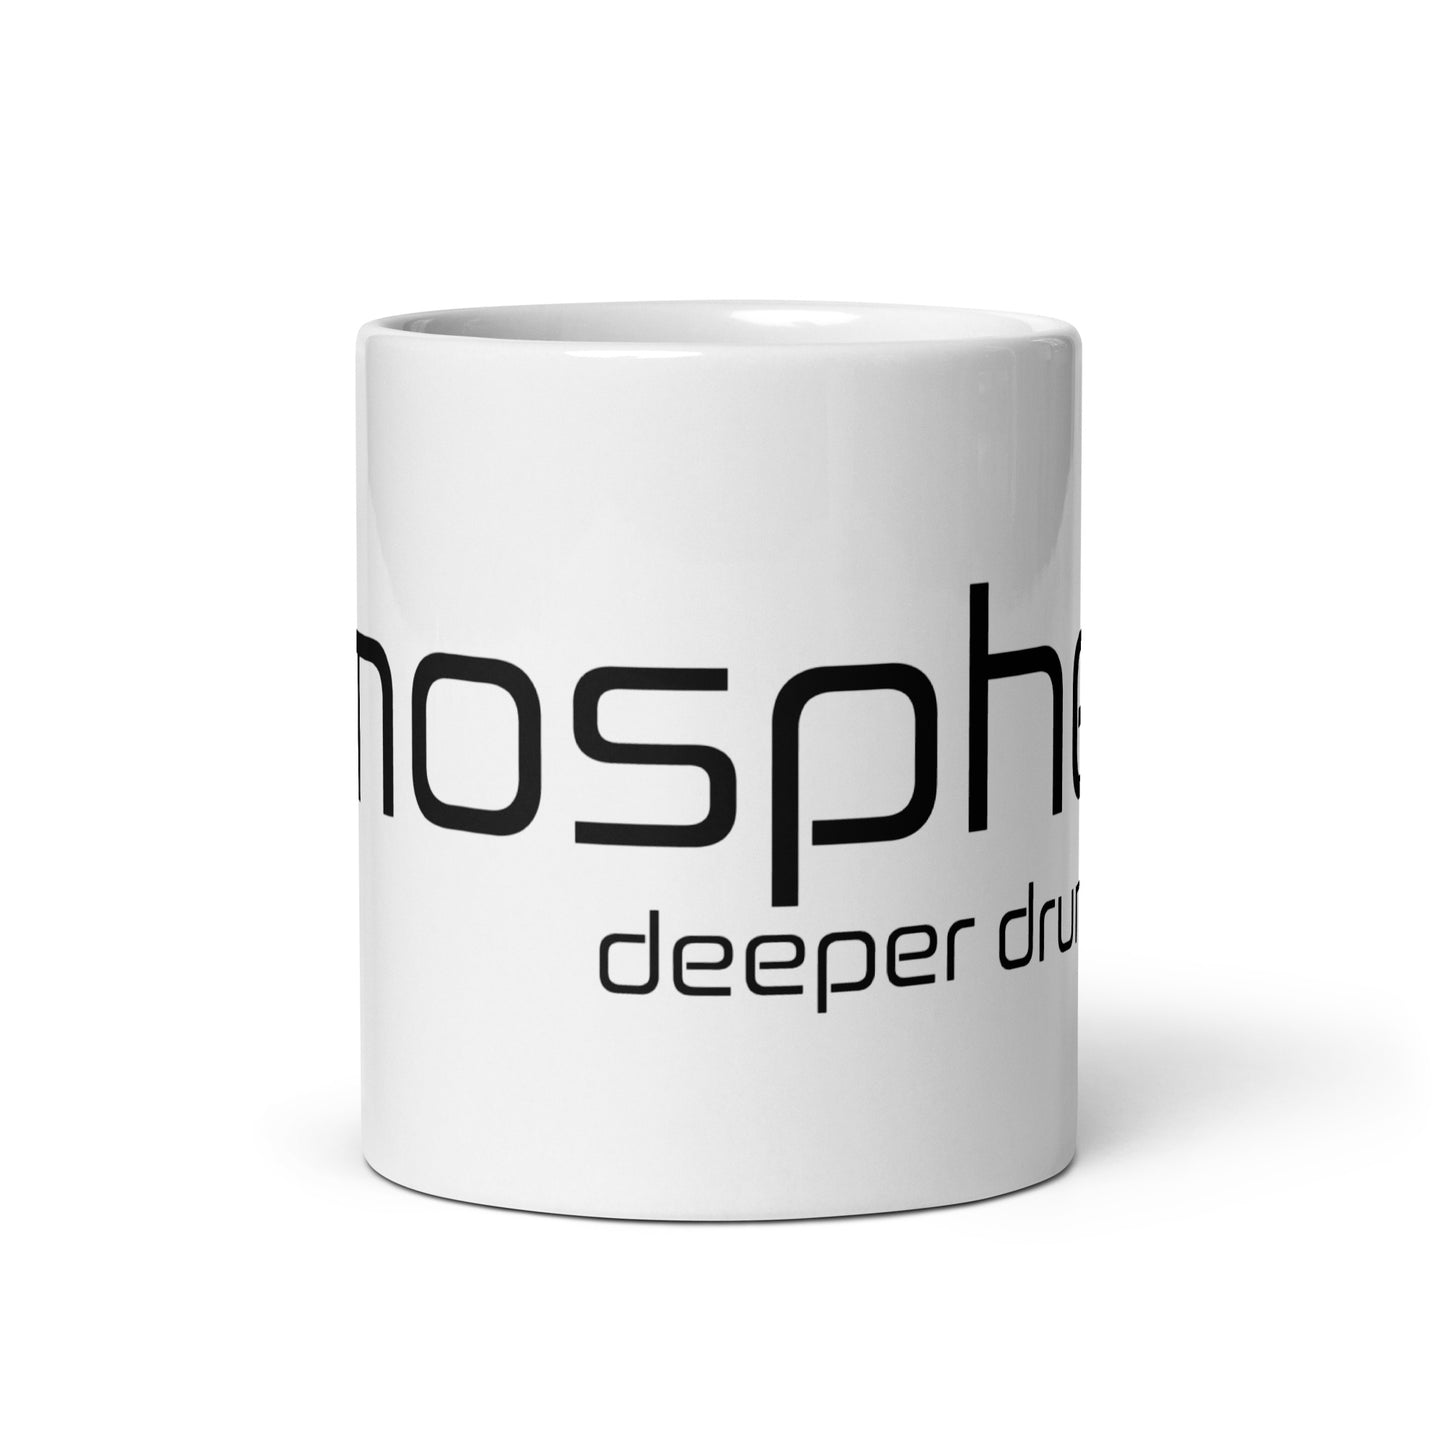 Atmosphere (v1) White glossy mug